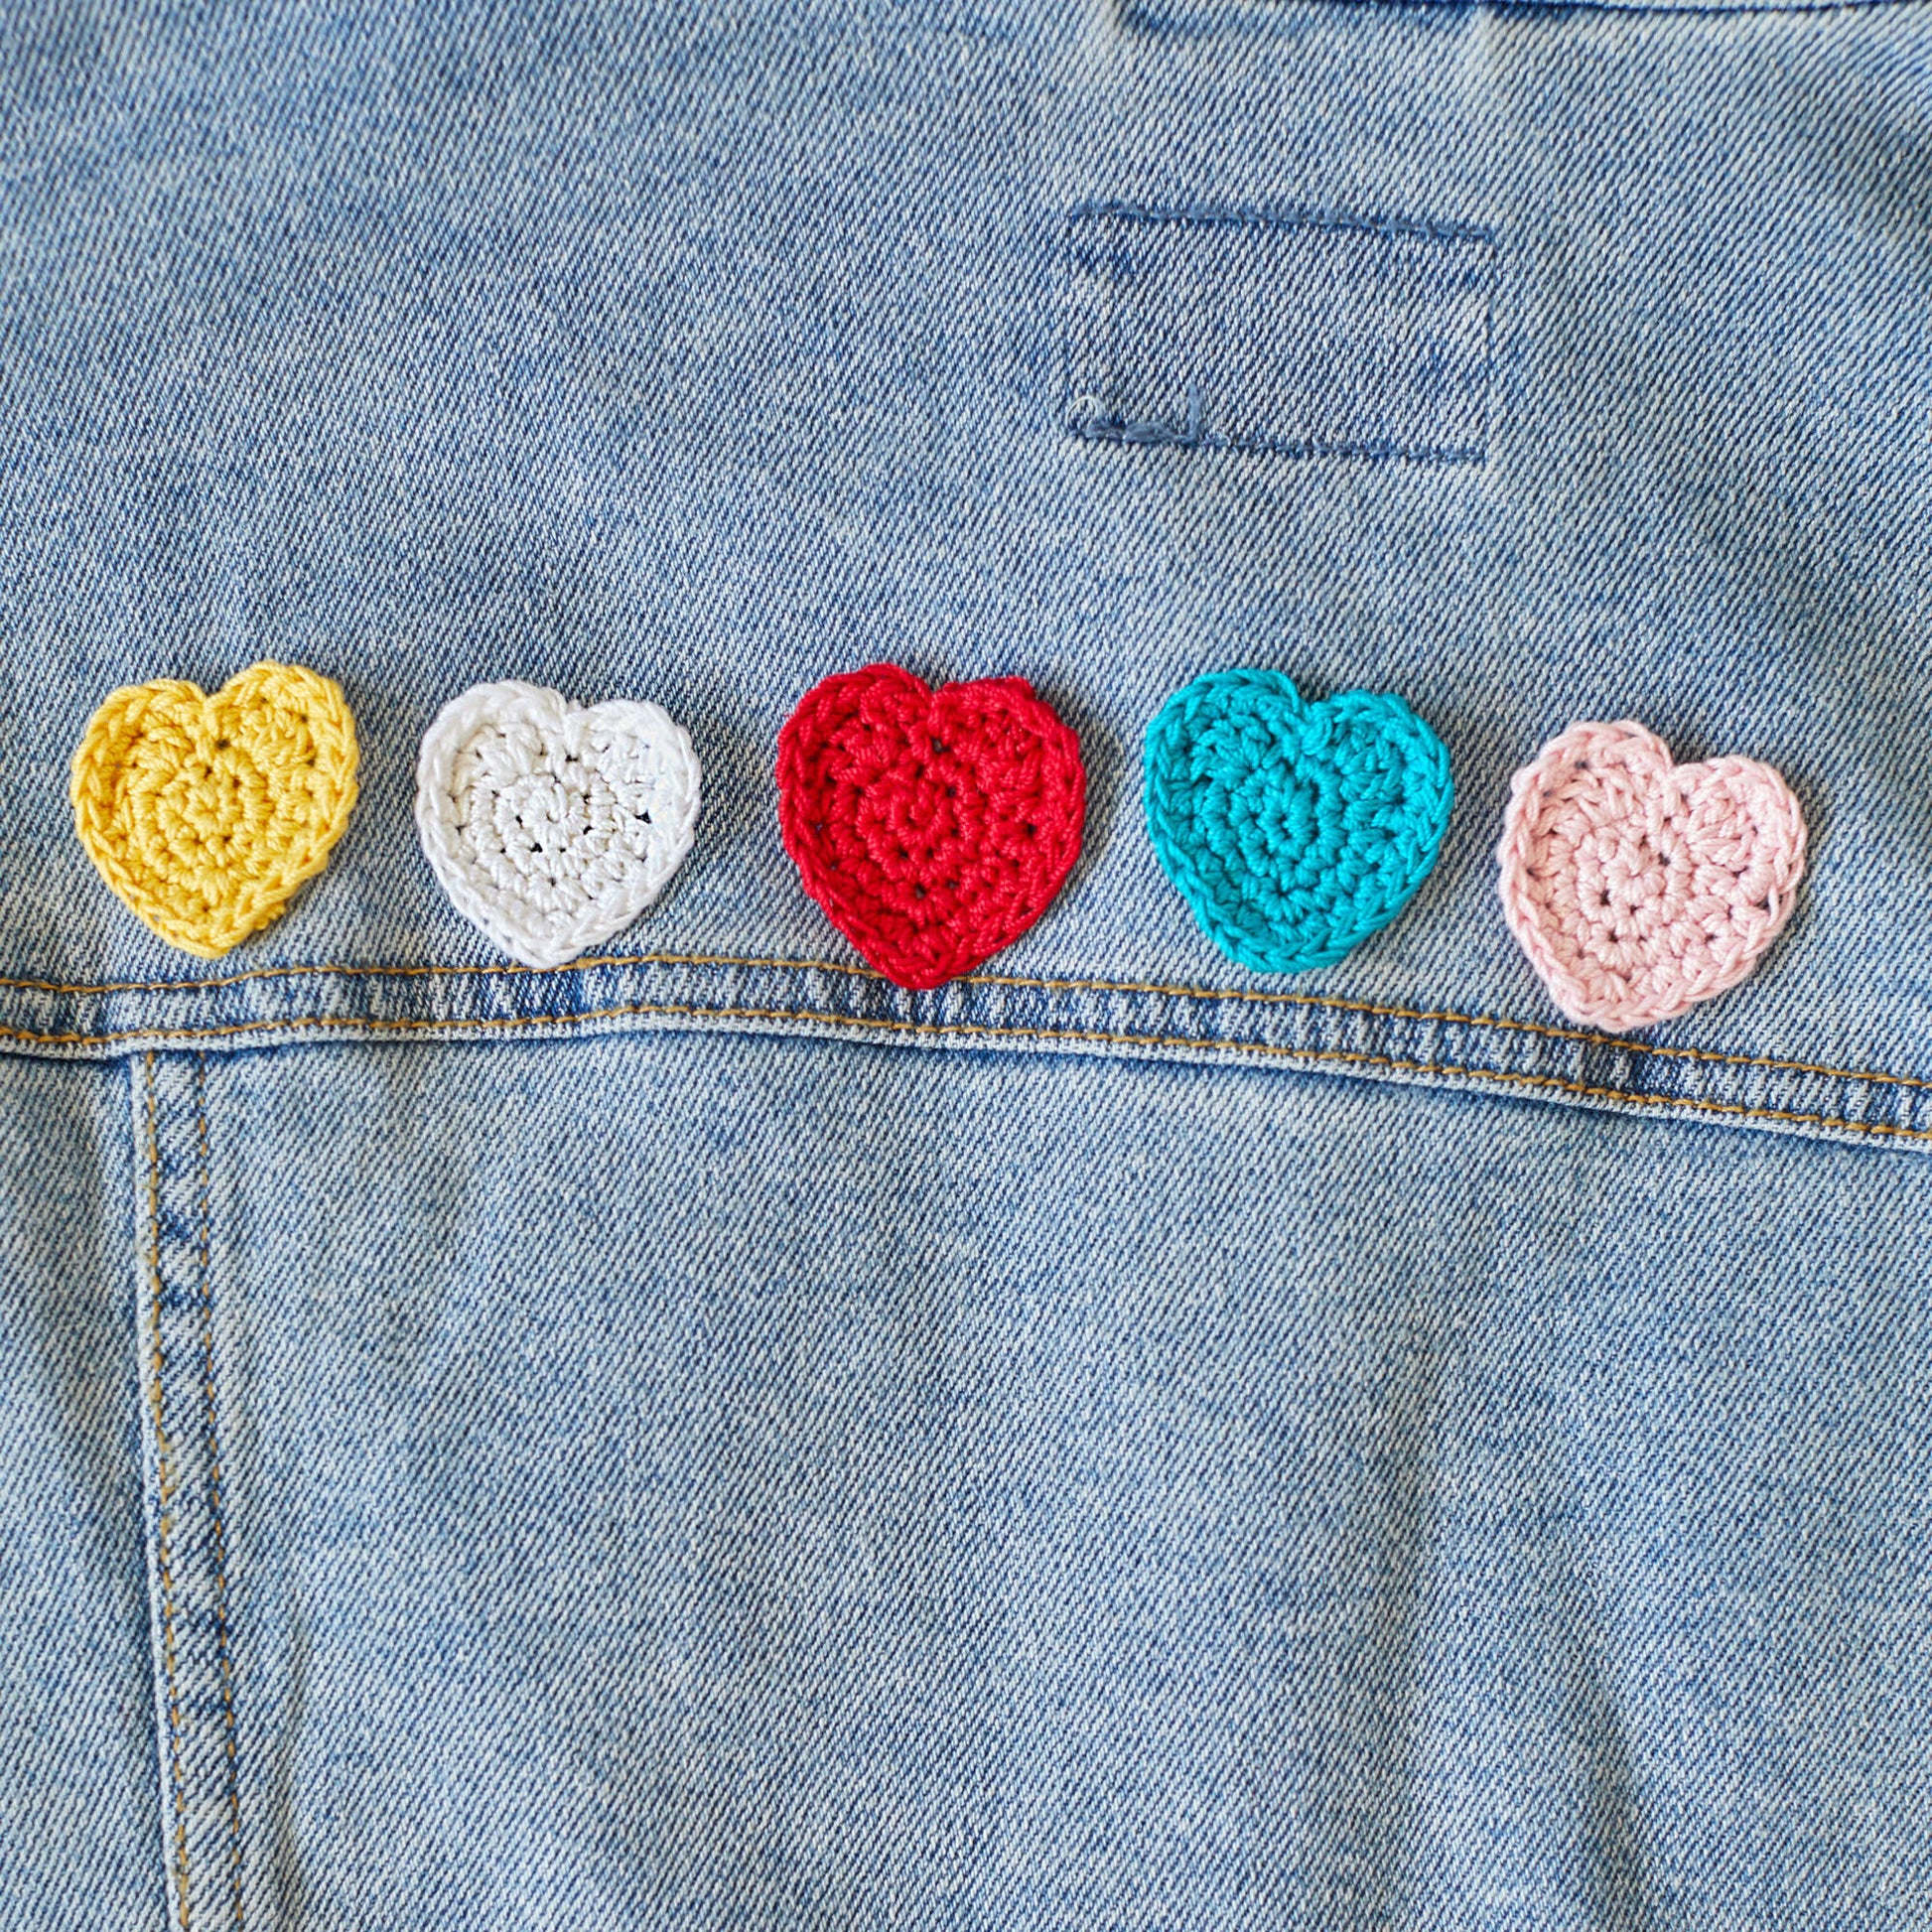 Free Aunt Lydia's Friendship Hearts Applique Crochet Pattern